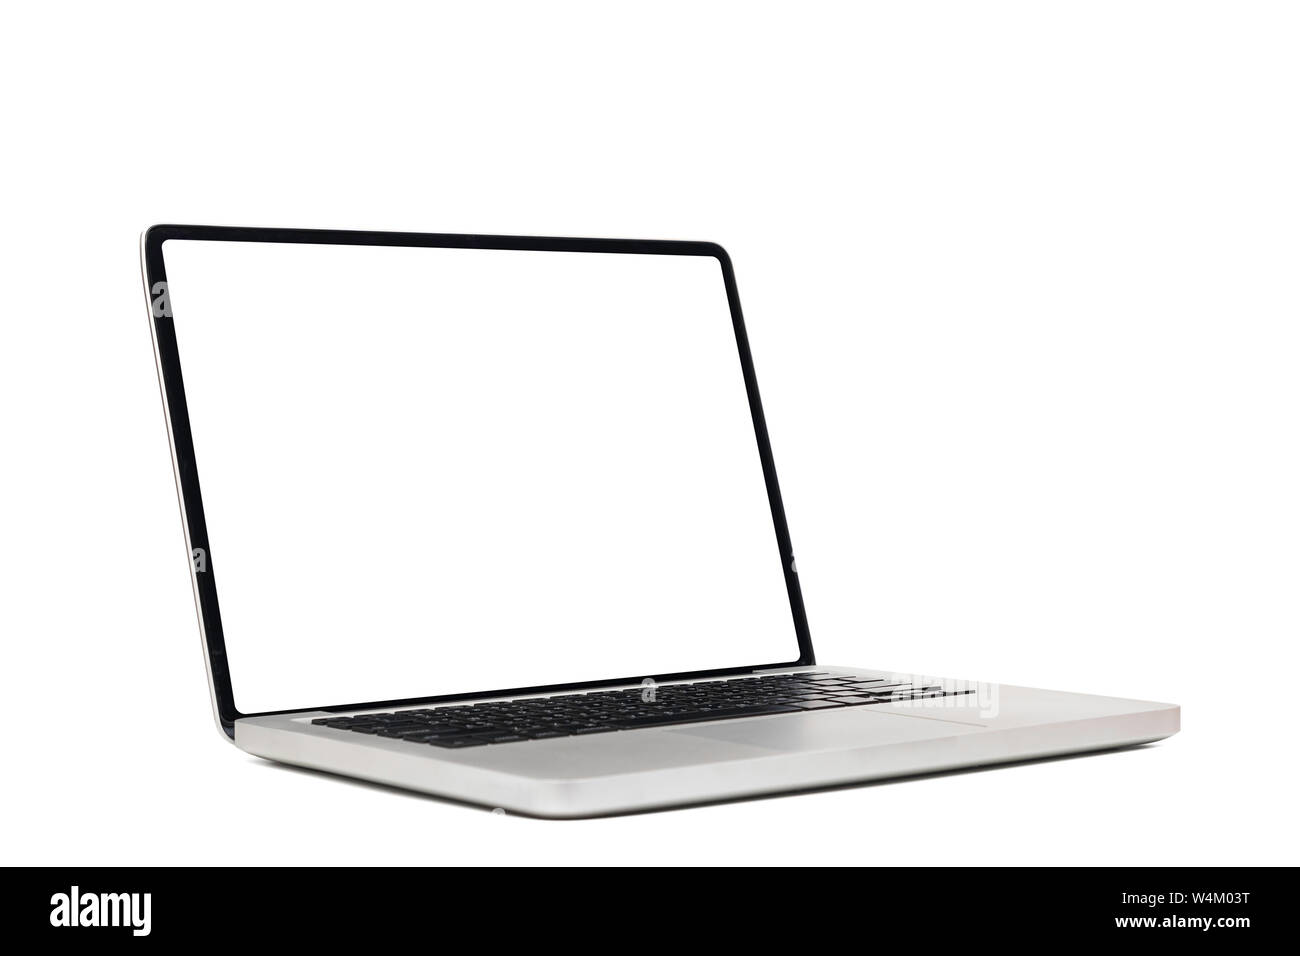 Modelo de ordenador portátil con pantalla en blanco vacío aislado sobre fondo blanco con trazado de recorte, vista lateral del moderno concepto de tecnología informática. Foto de stock